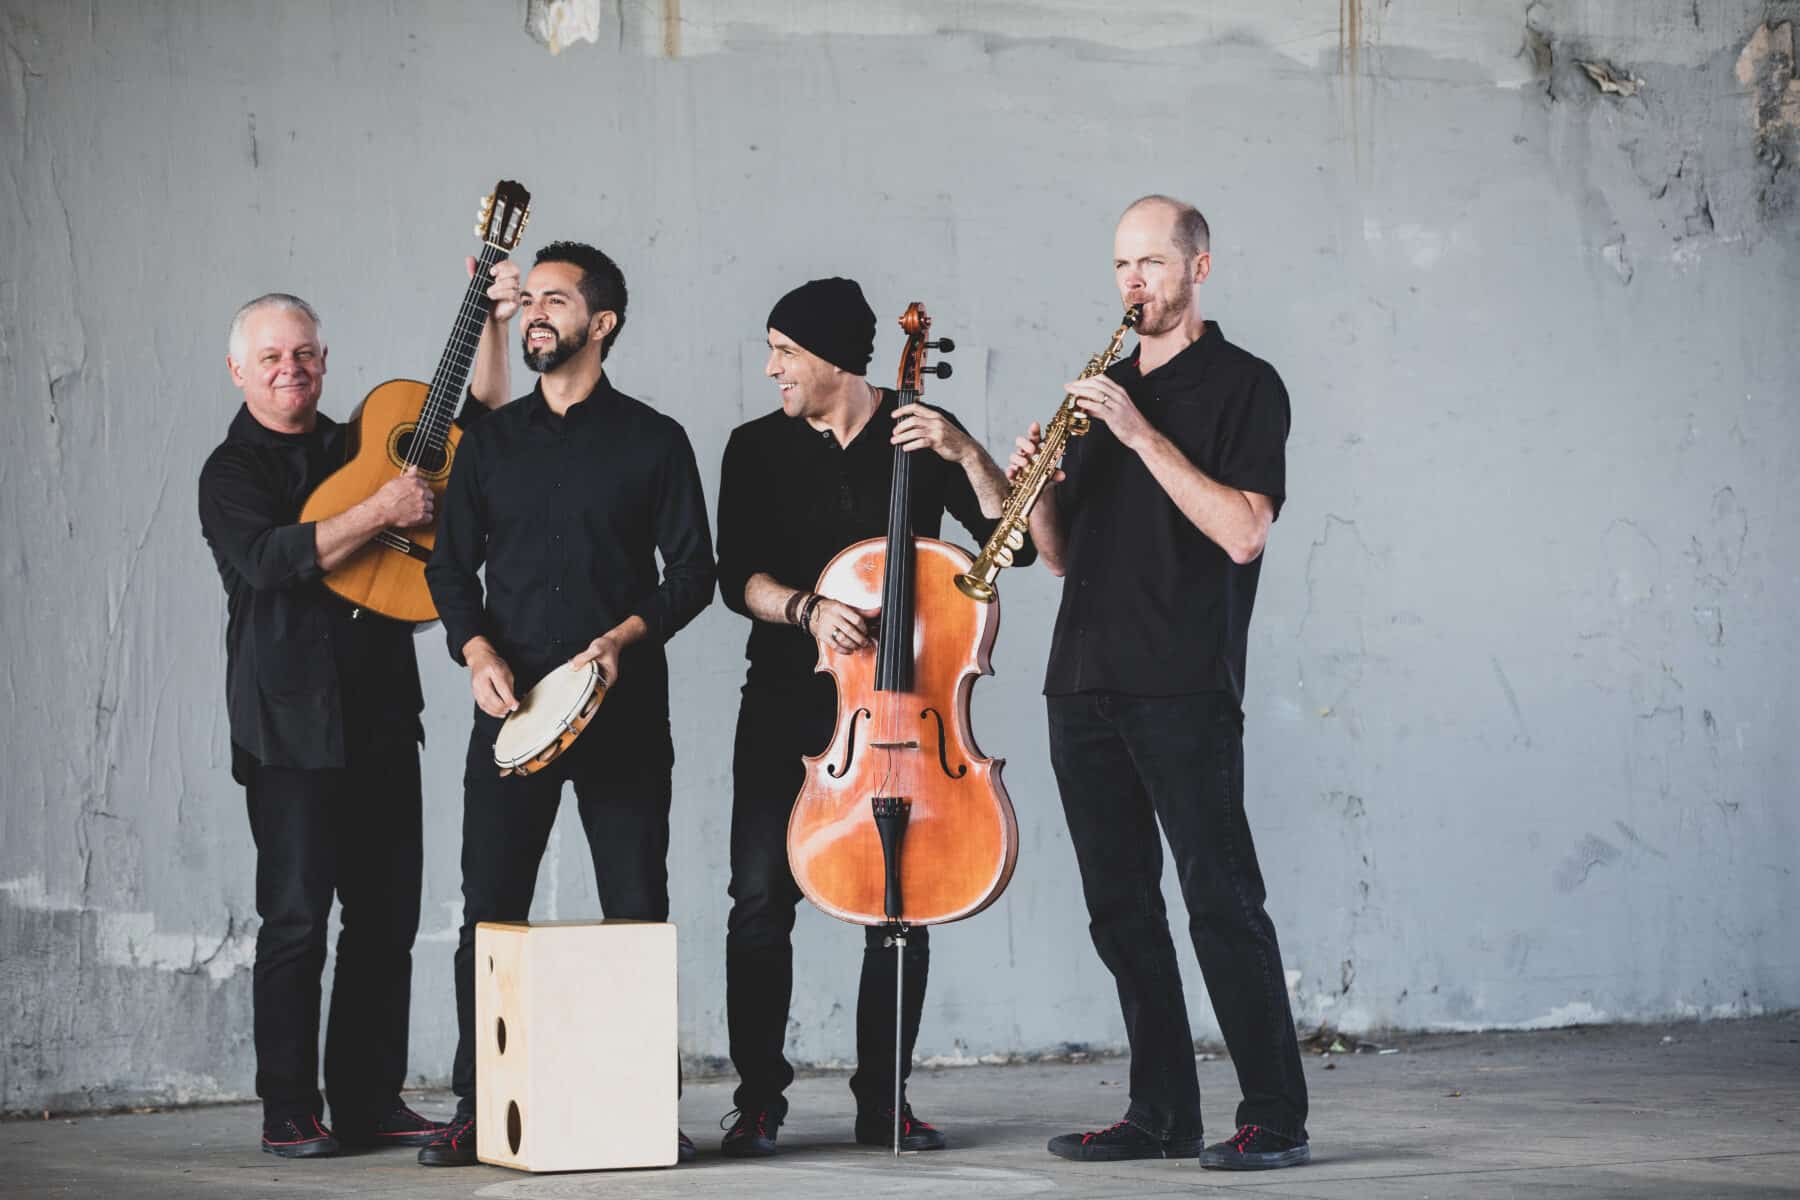 Quarteto Nuevo pose with their instruments against a concrete wall.